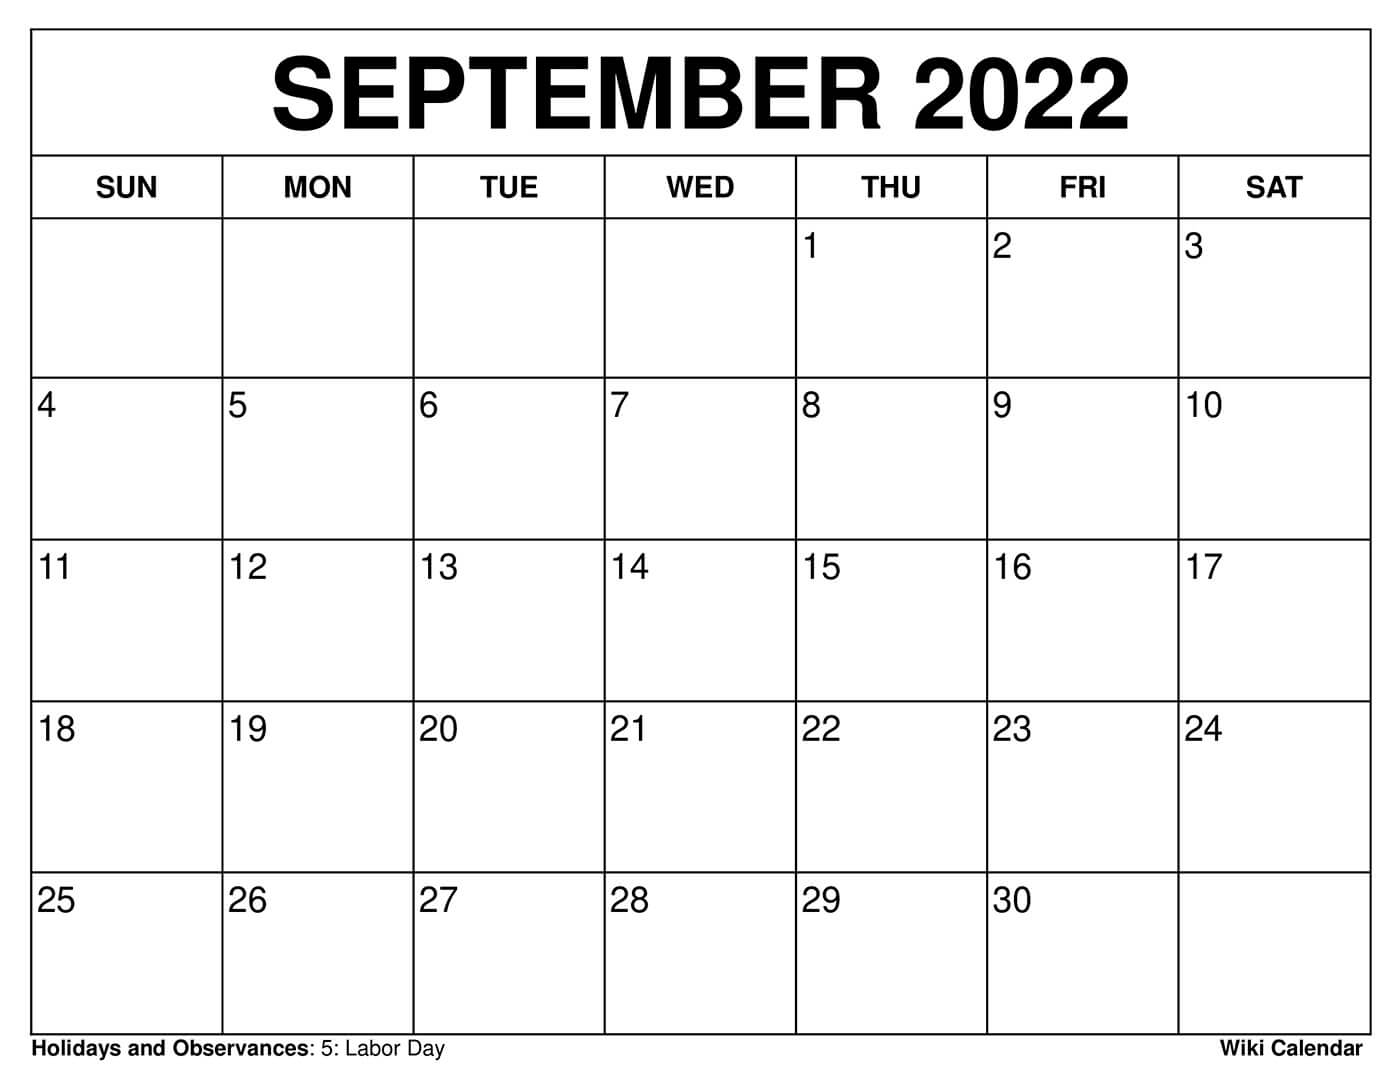 Download September 2022 Calendar Free Printable September 2022 Calendars - Wiki Calendar